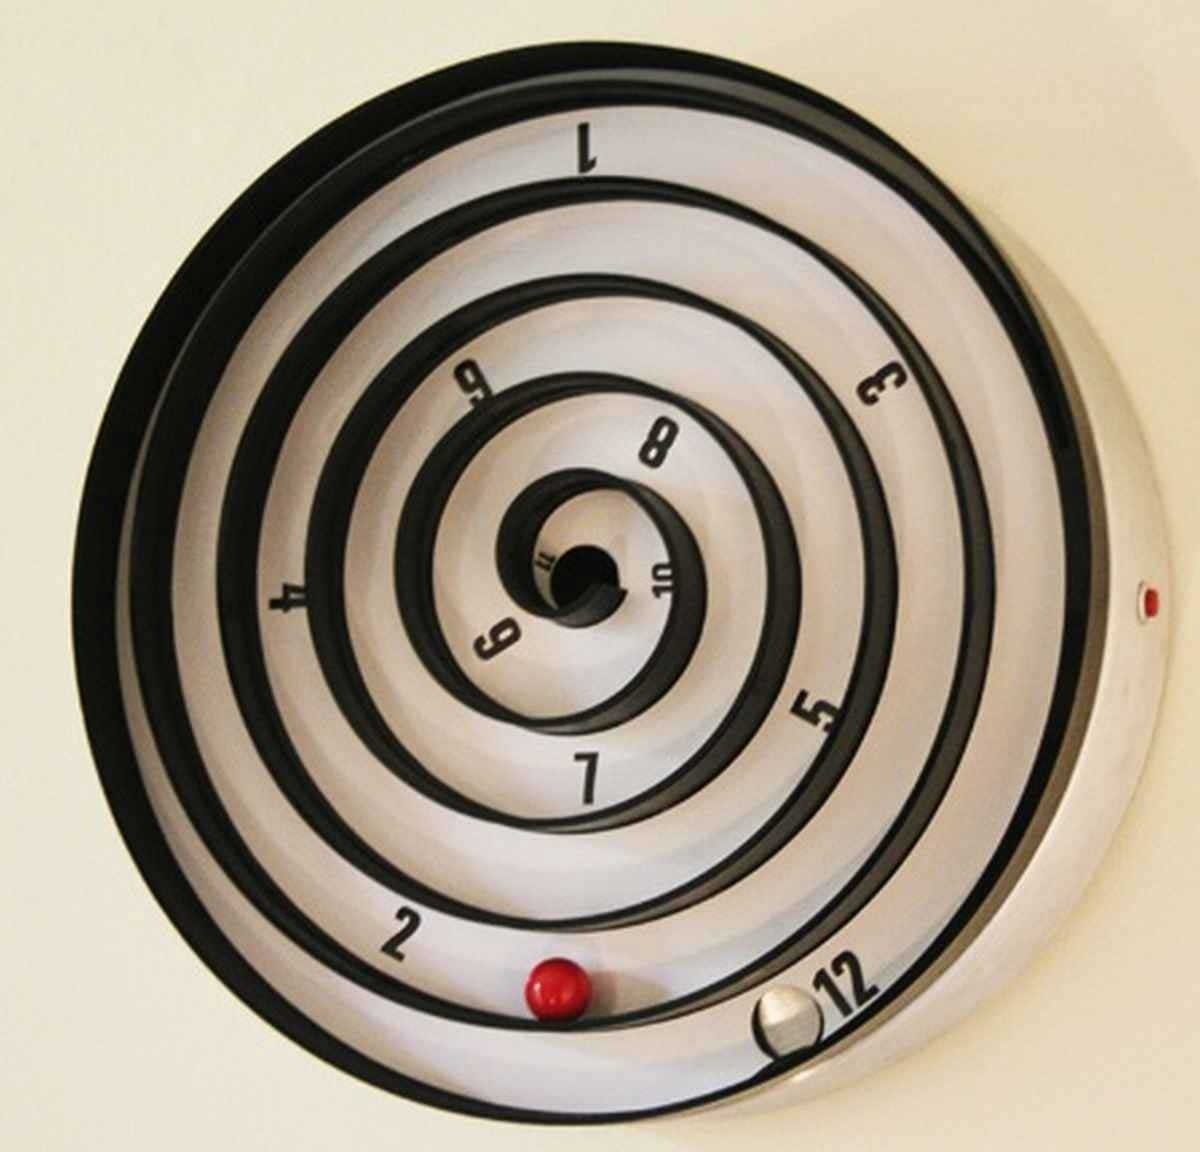 Creative clocks and unusual clock designs 15 9